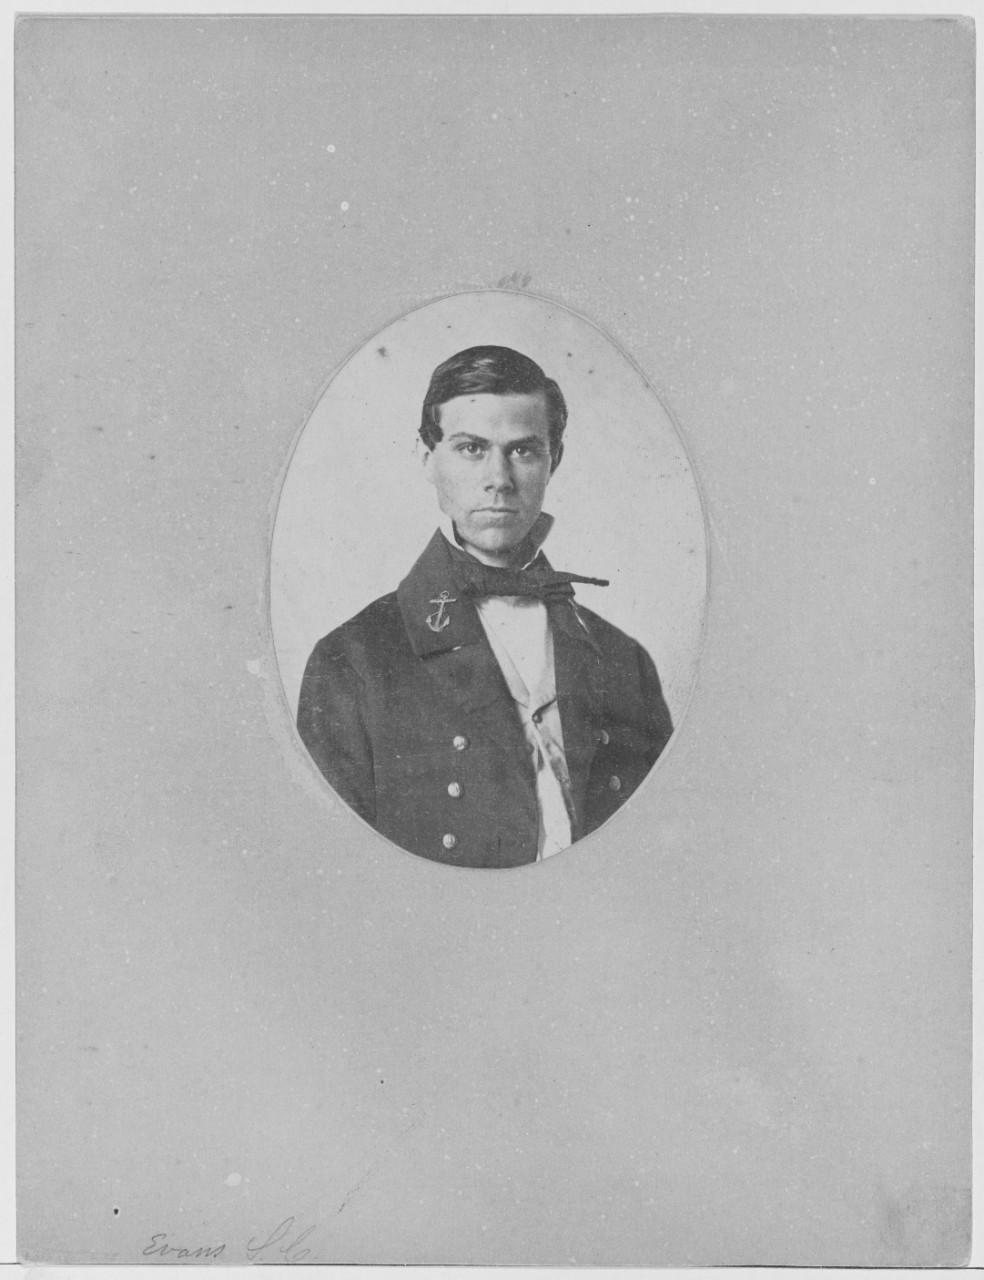 Midshipman William E. Evans, USN